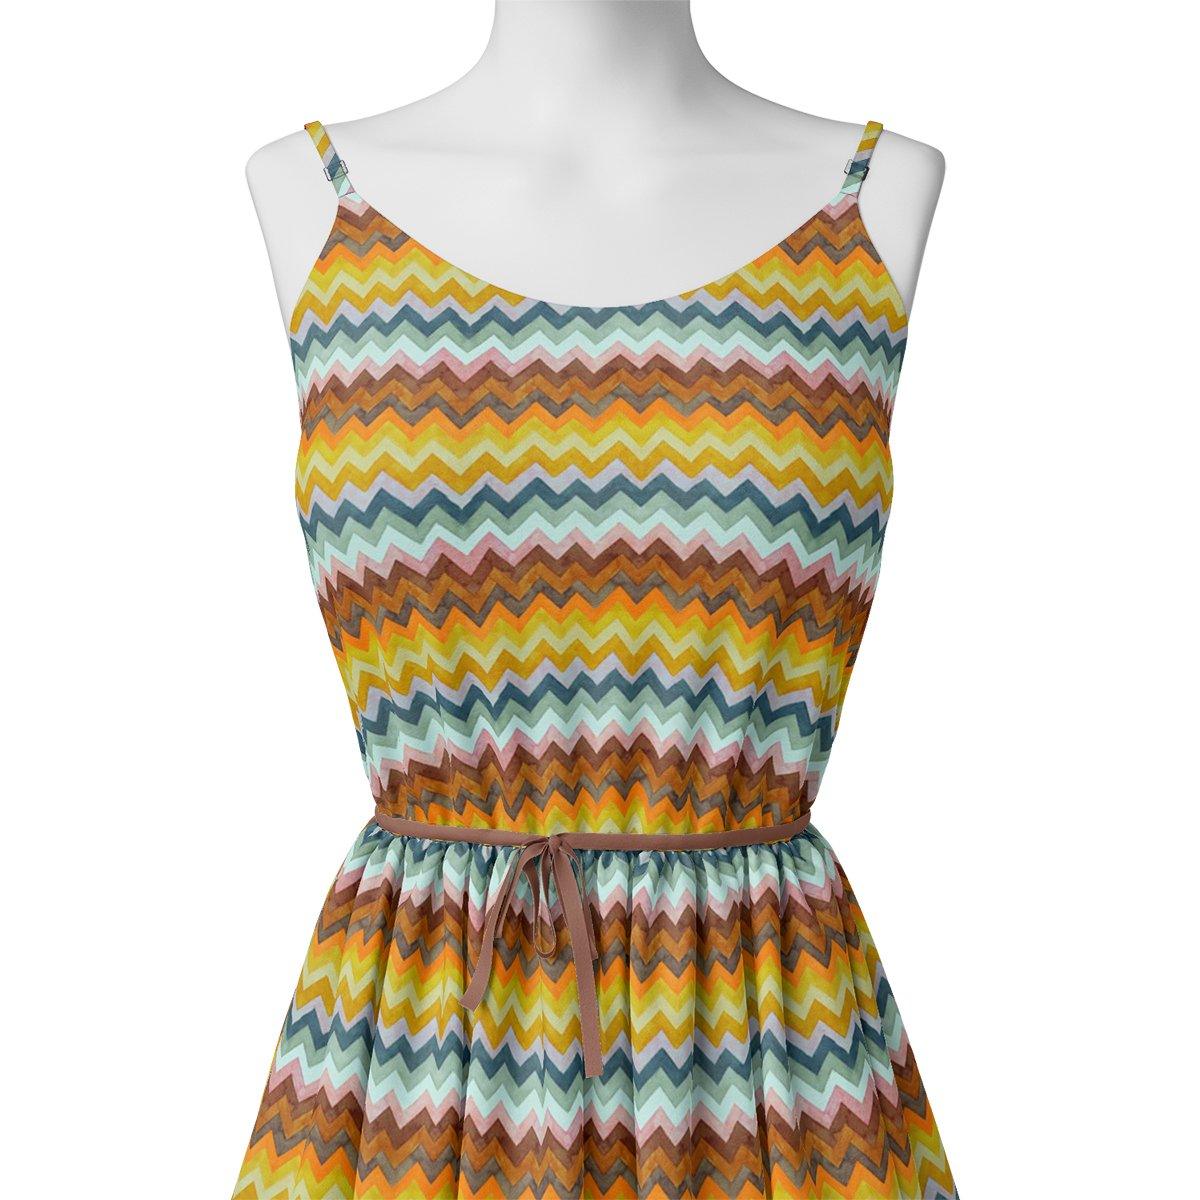 Classic Zigzag Multicolour Waves Digital Printed Fabric - Pure Georgette - FAB VOGUE Studio®